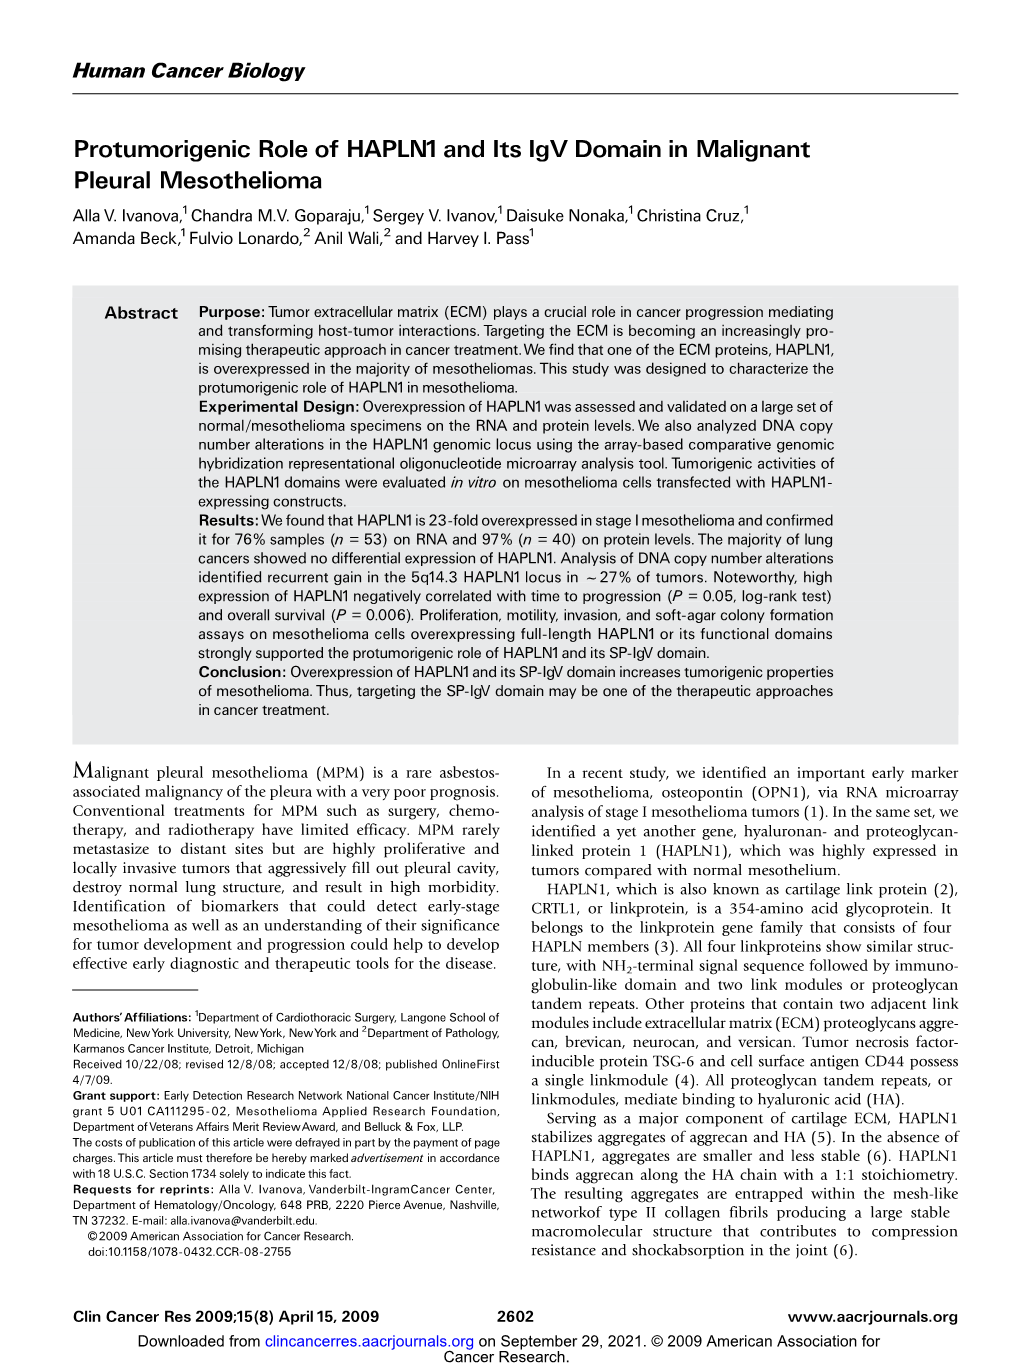 Protumorigenic Role of HAPLN1 and Its Igv Domain in Malignant Pleural Mesothelioma Alla V